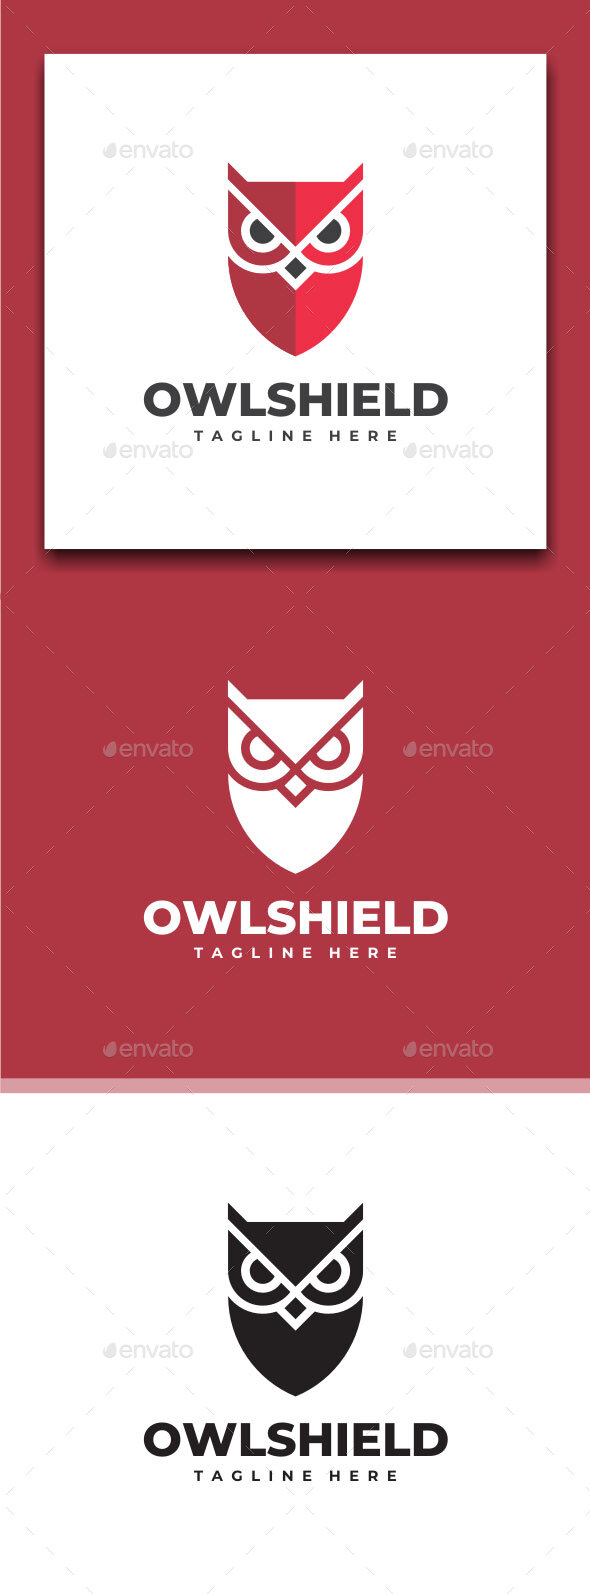 [DOWNLOAD]Owl Shield Logo Template